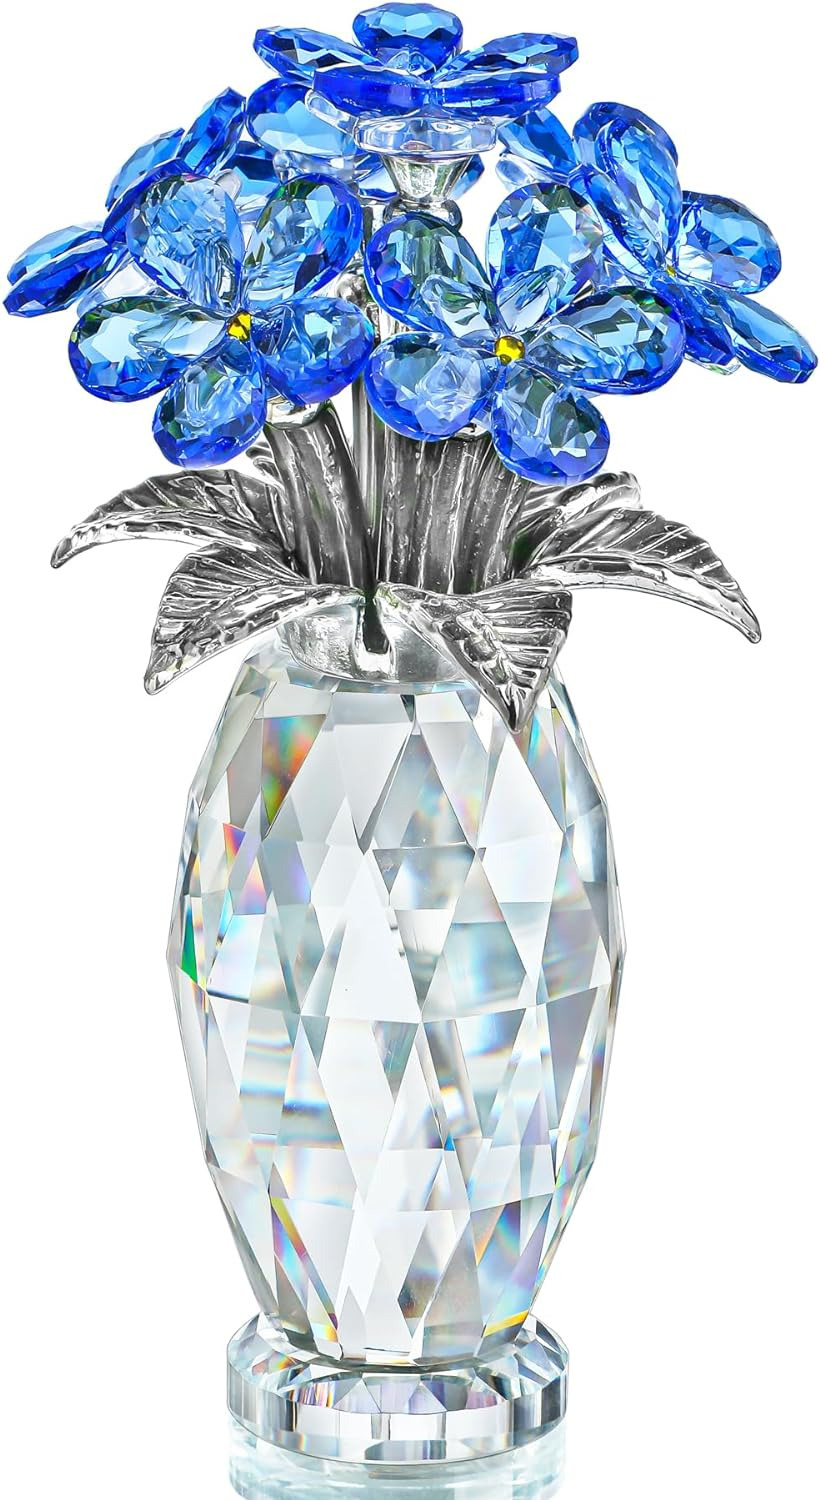 H&D HYALINE & DORA Blue Crystal Forget Me Not Flower Figurine,Flower Gifts 